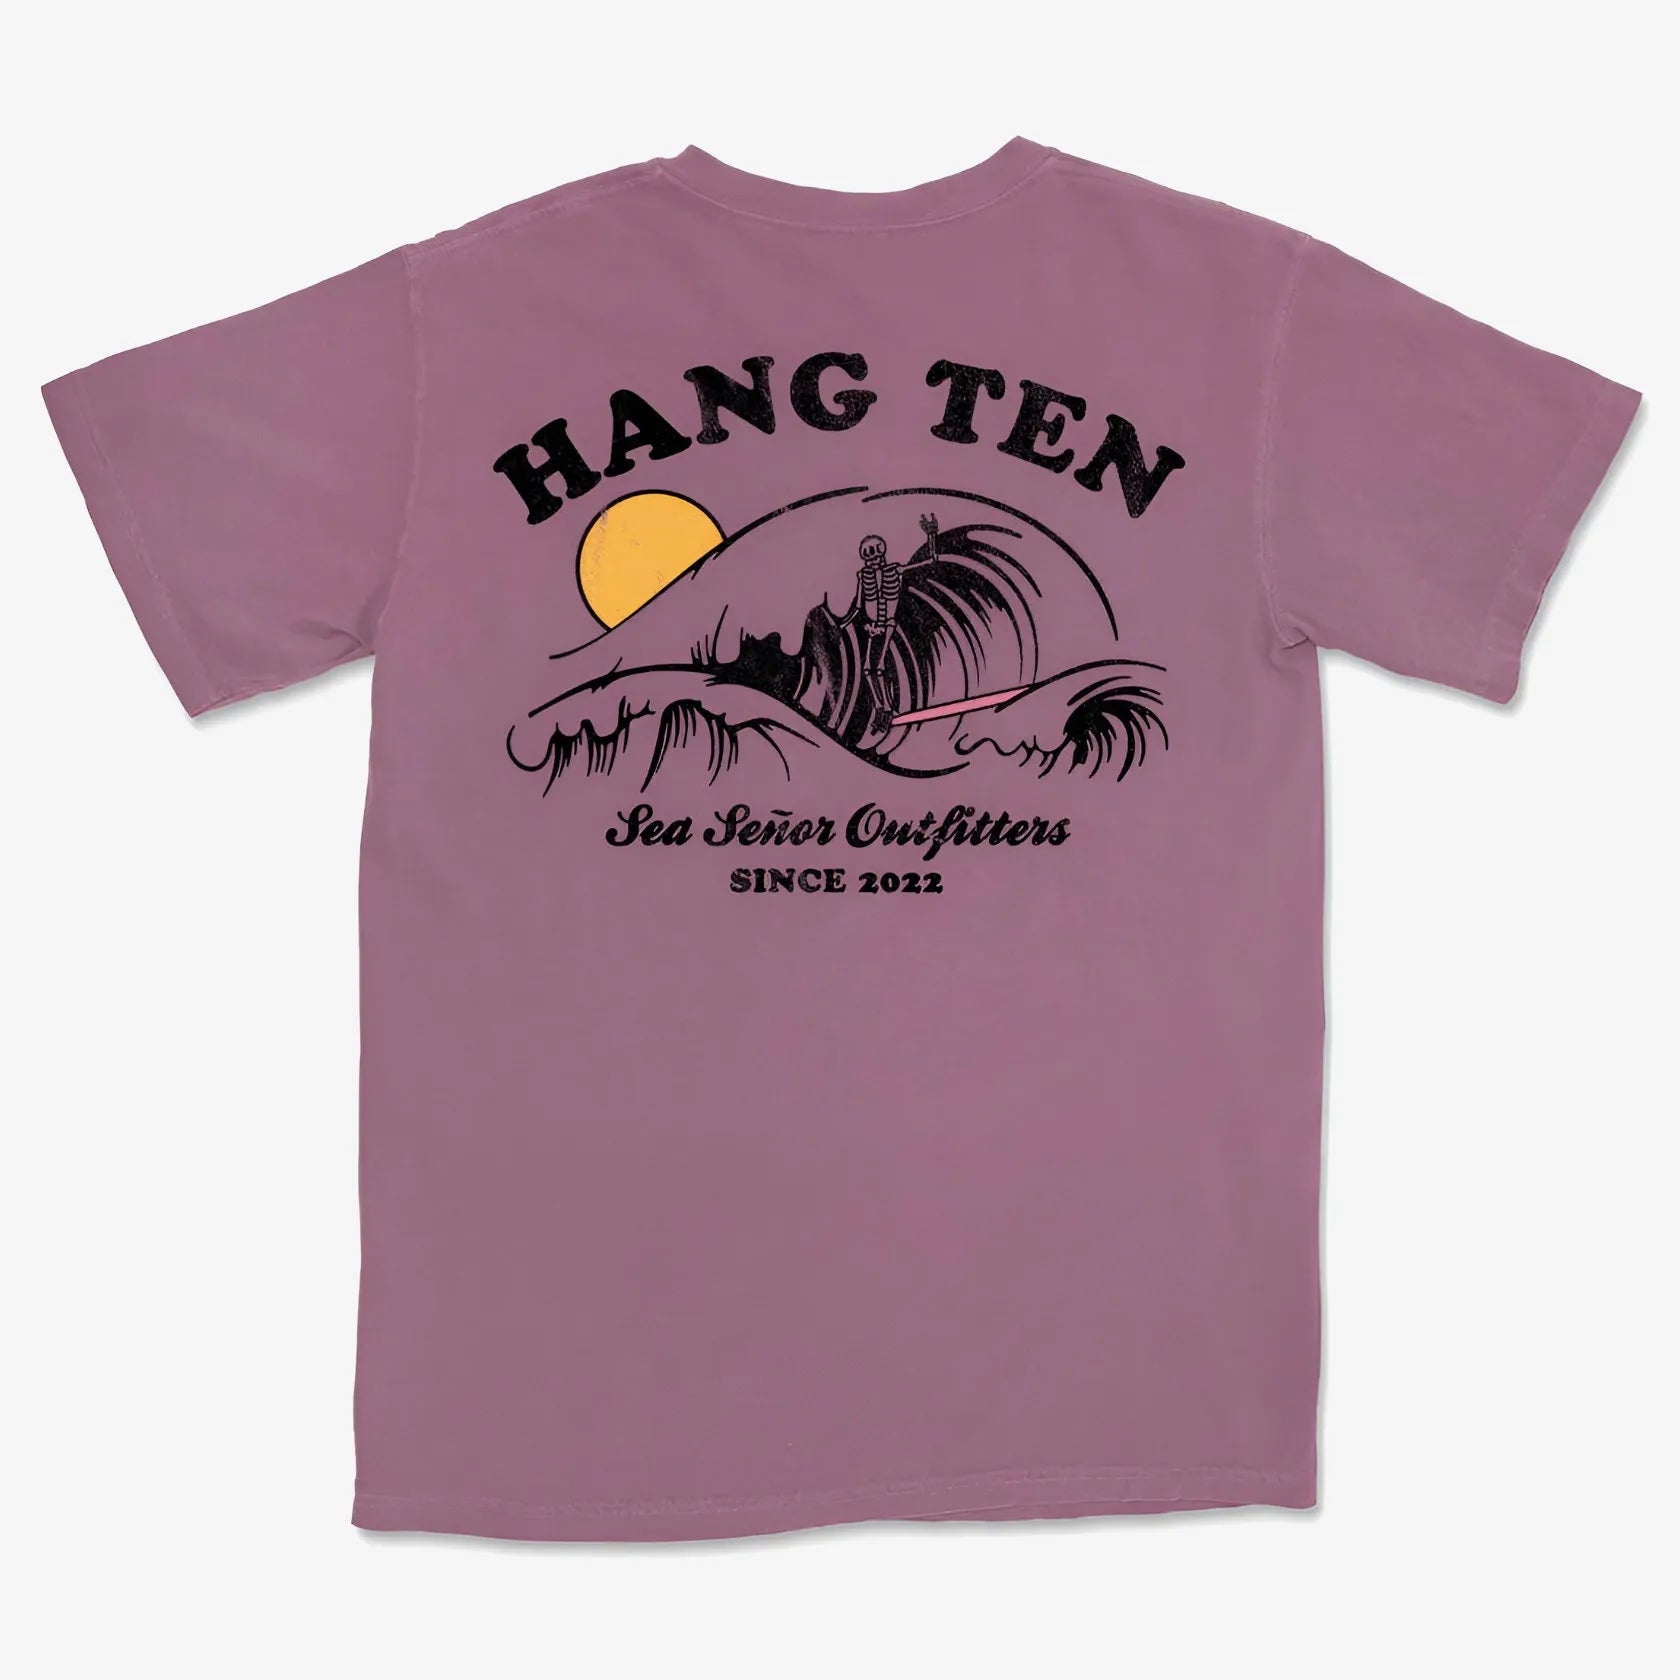 Hang Ten - Pocket - Sea Señor Outfitters